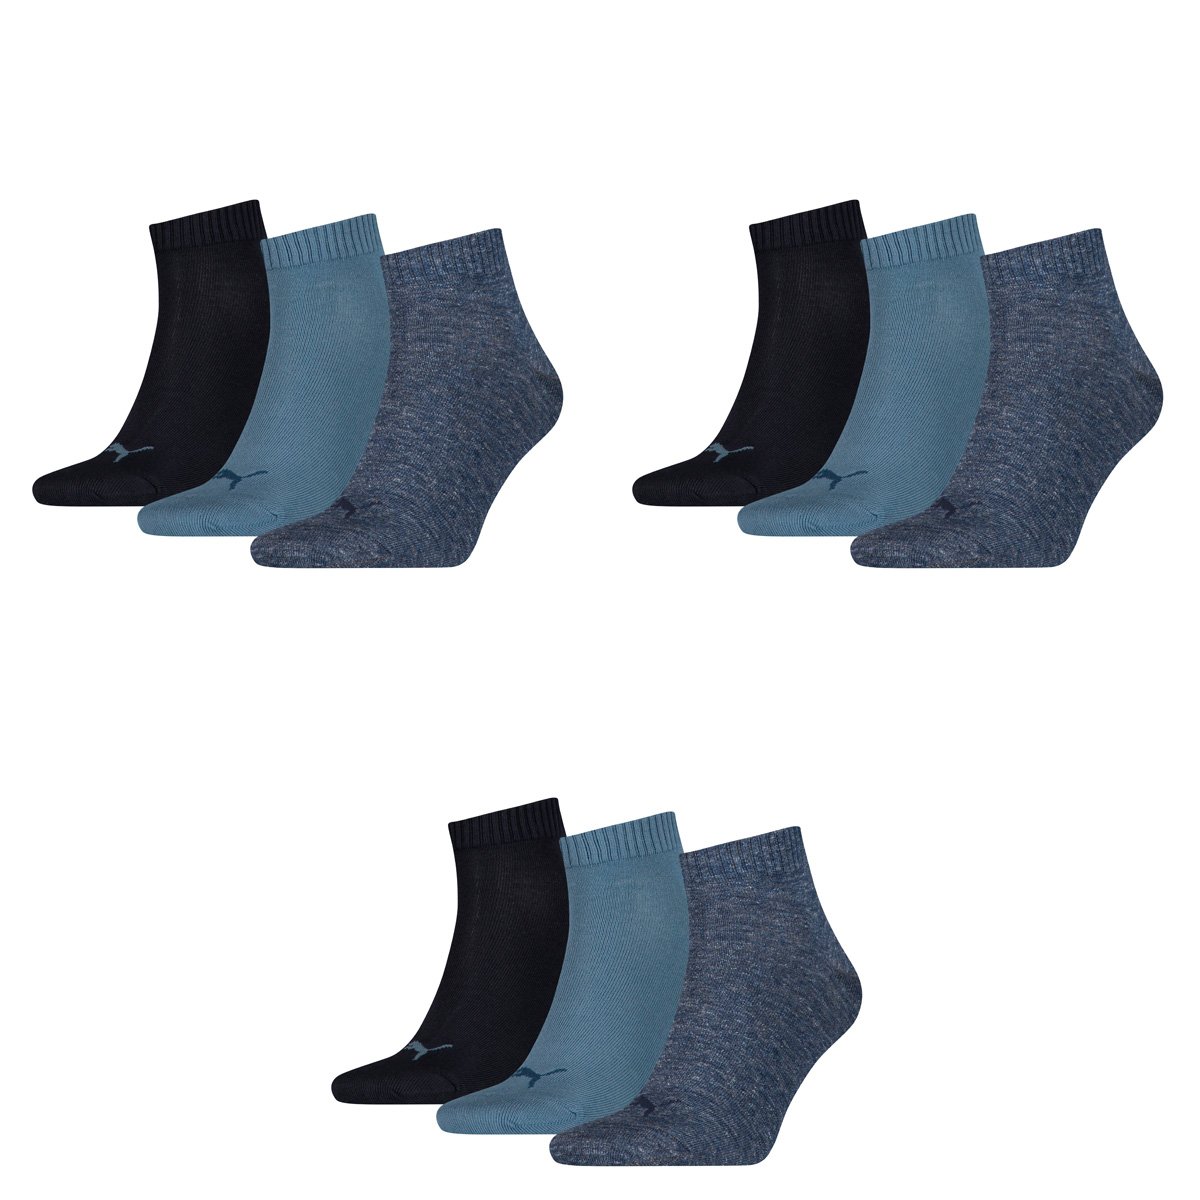 Puma Unisex Quarter Socken Sneaker Gr. 35-49 für Damen Herren Füßlinge, Socken & Strümpfe:47-49, Farbe:460 denim blue, 9 Paar